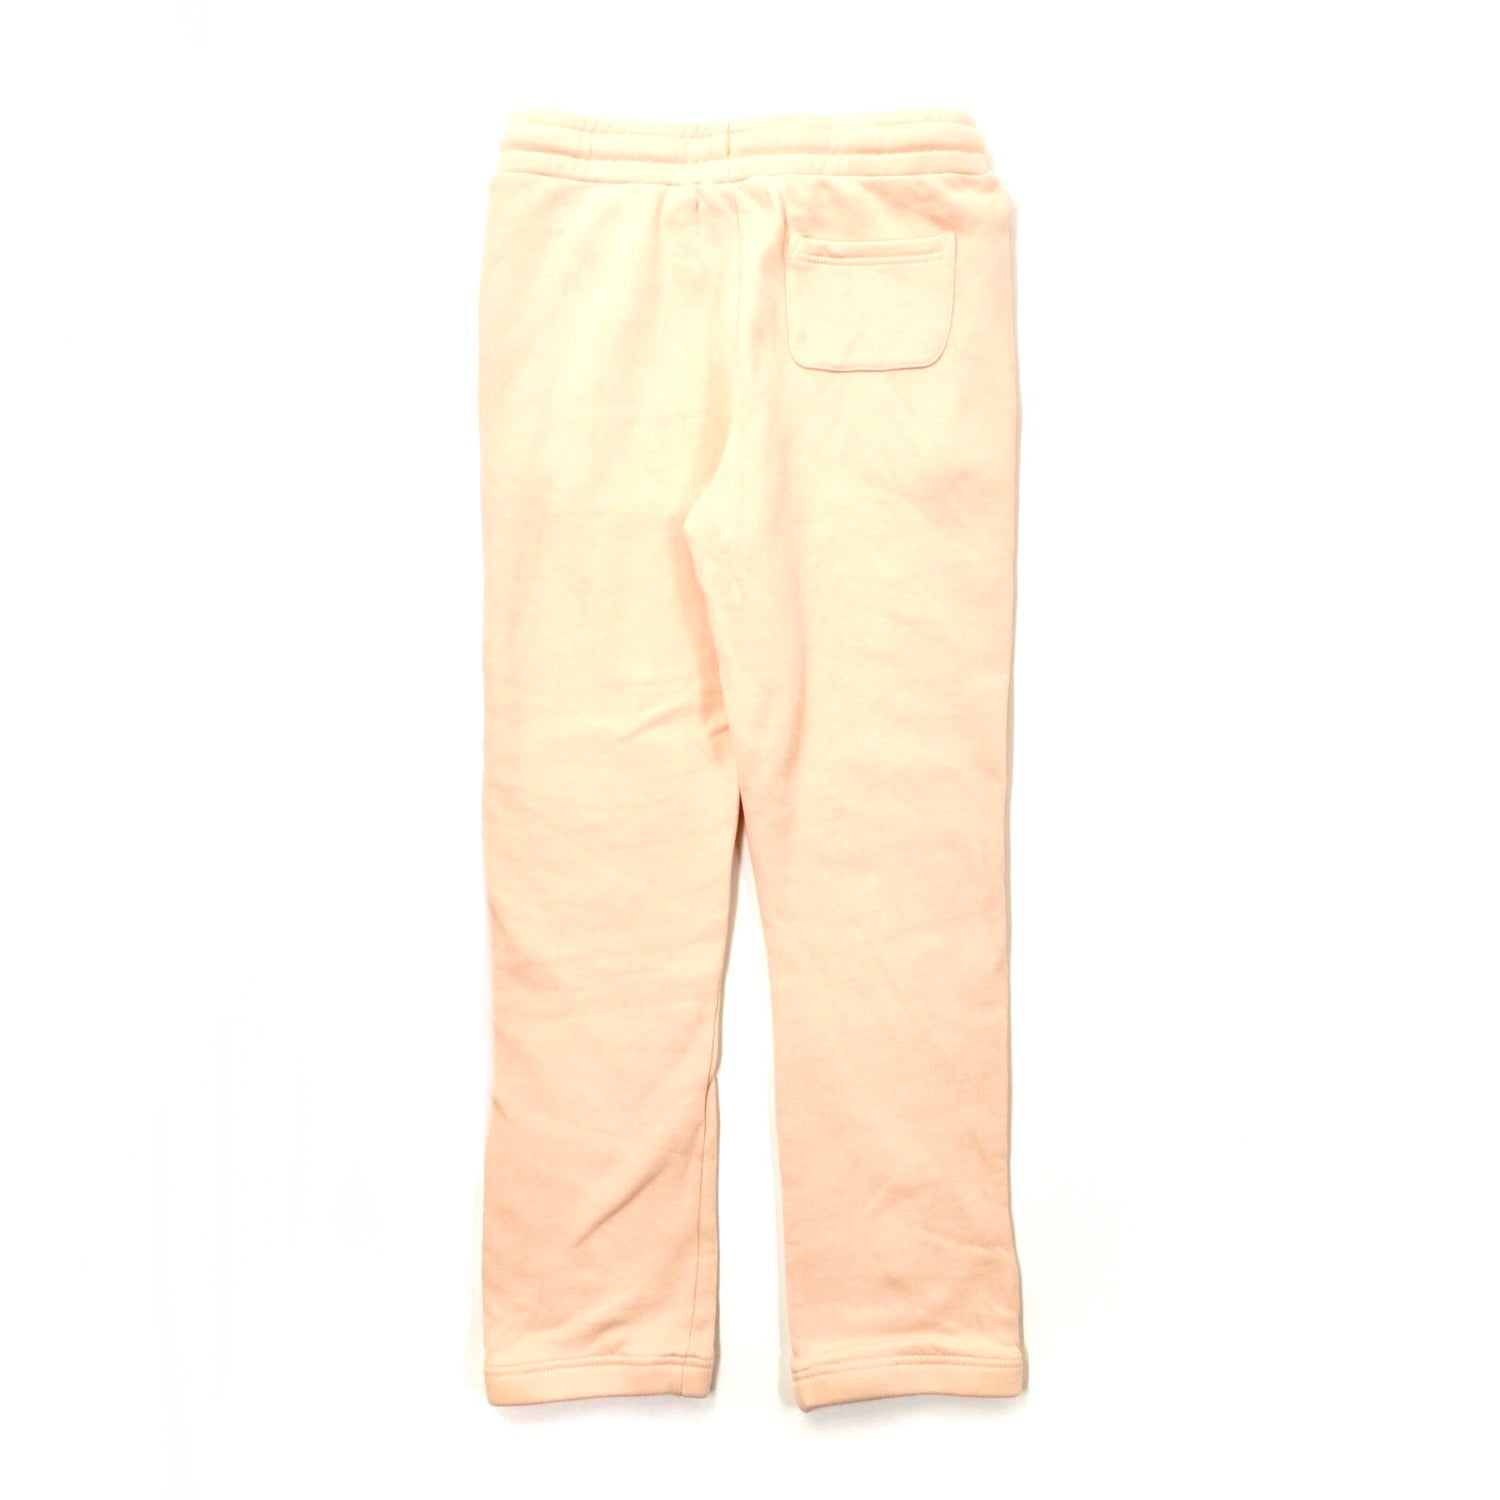 Kith sweat pants 10/11 beige cotton box logo back hair – 日本然リトテ